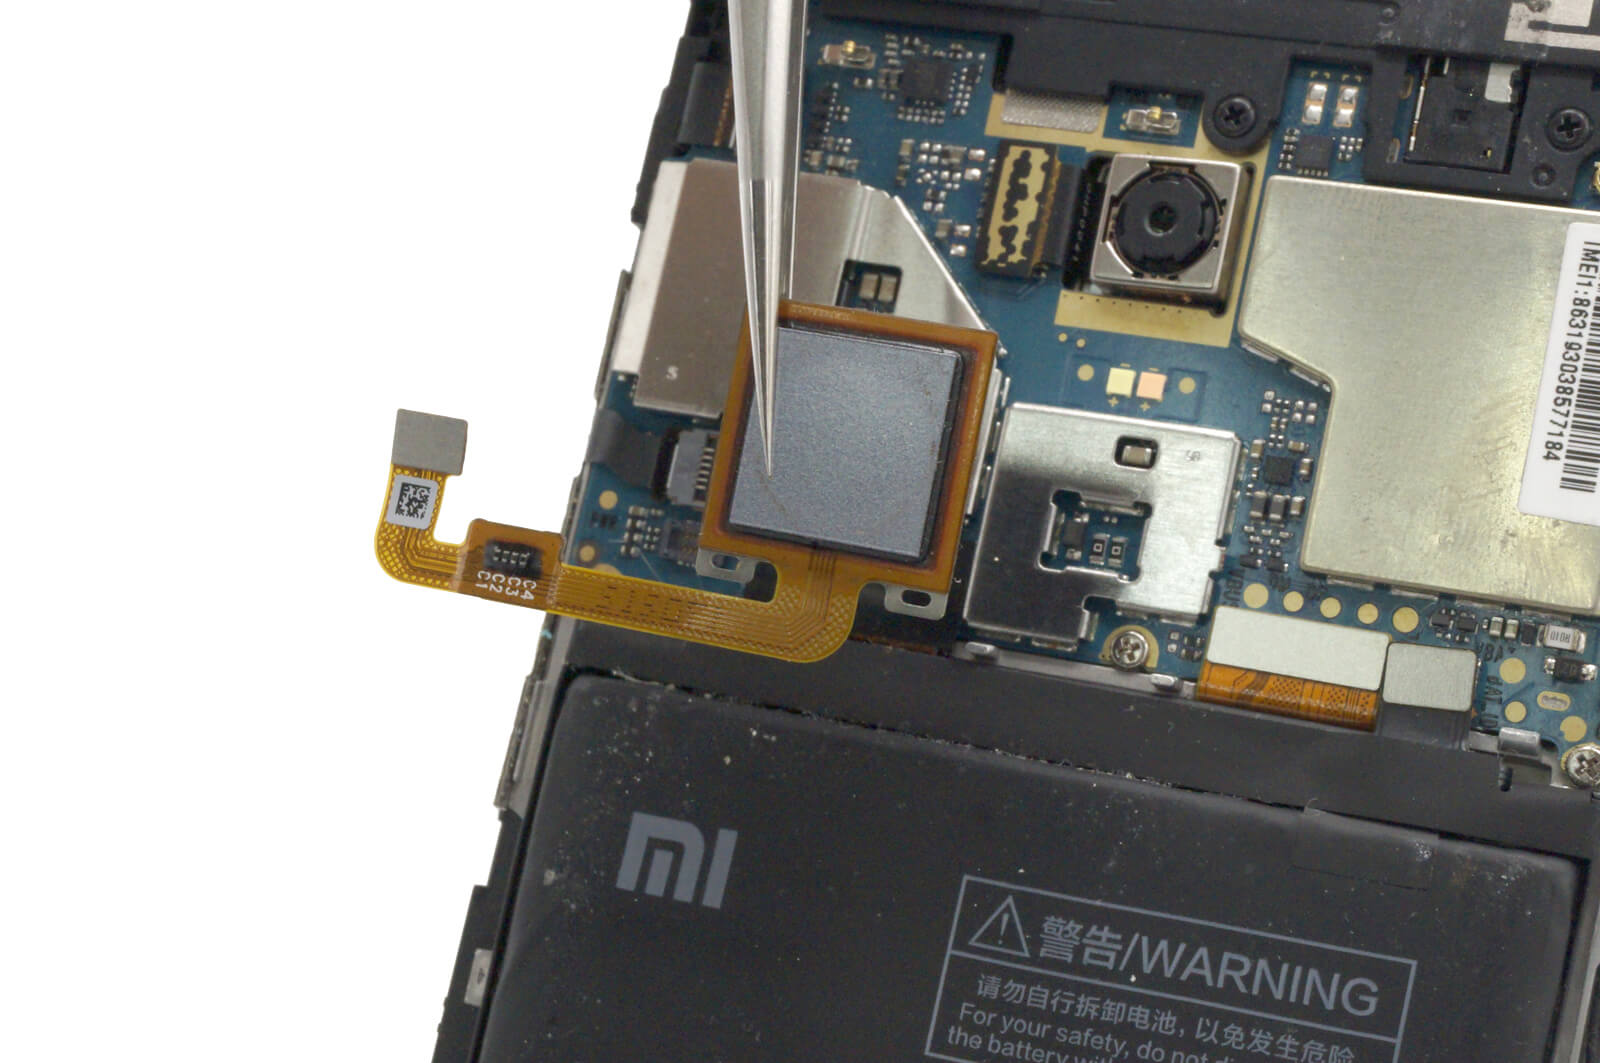 Redmi Note 4 X Аккумулятор